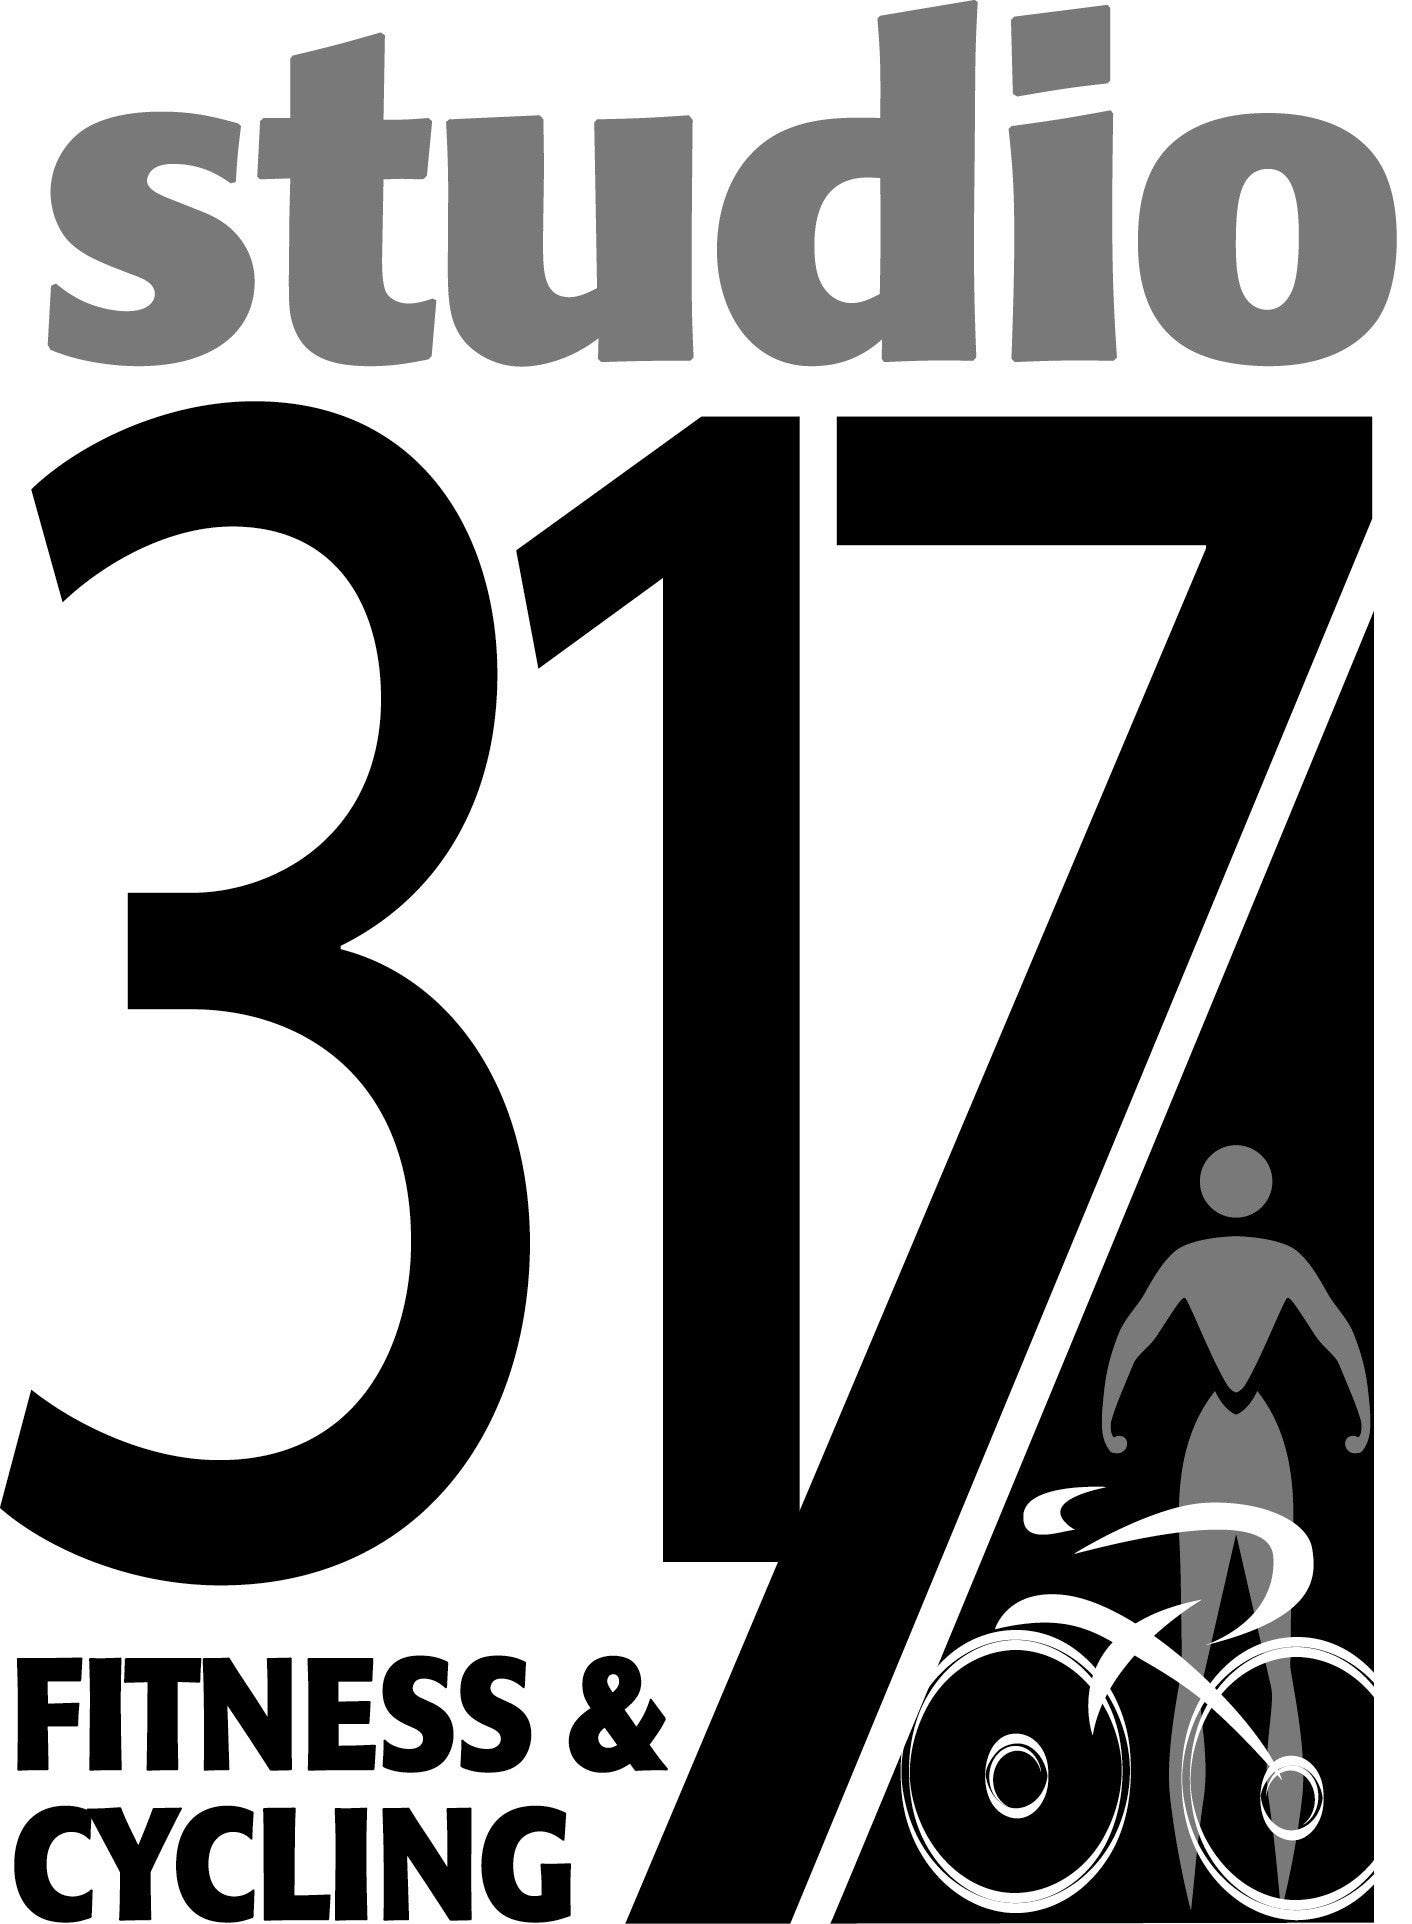 Fitness Studio In Greenwood IN - Studio 317 Fitness & Cycling In Greenwood  IN - Studio 317 Fitness & Cycling